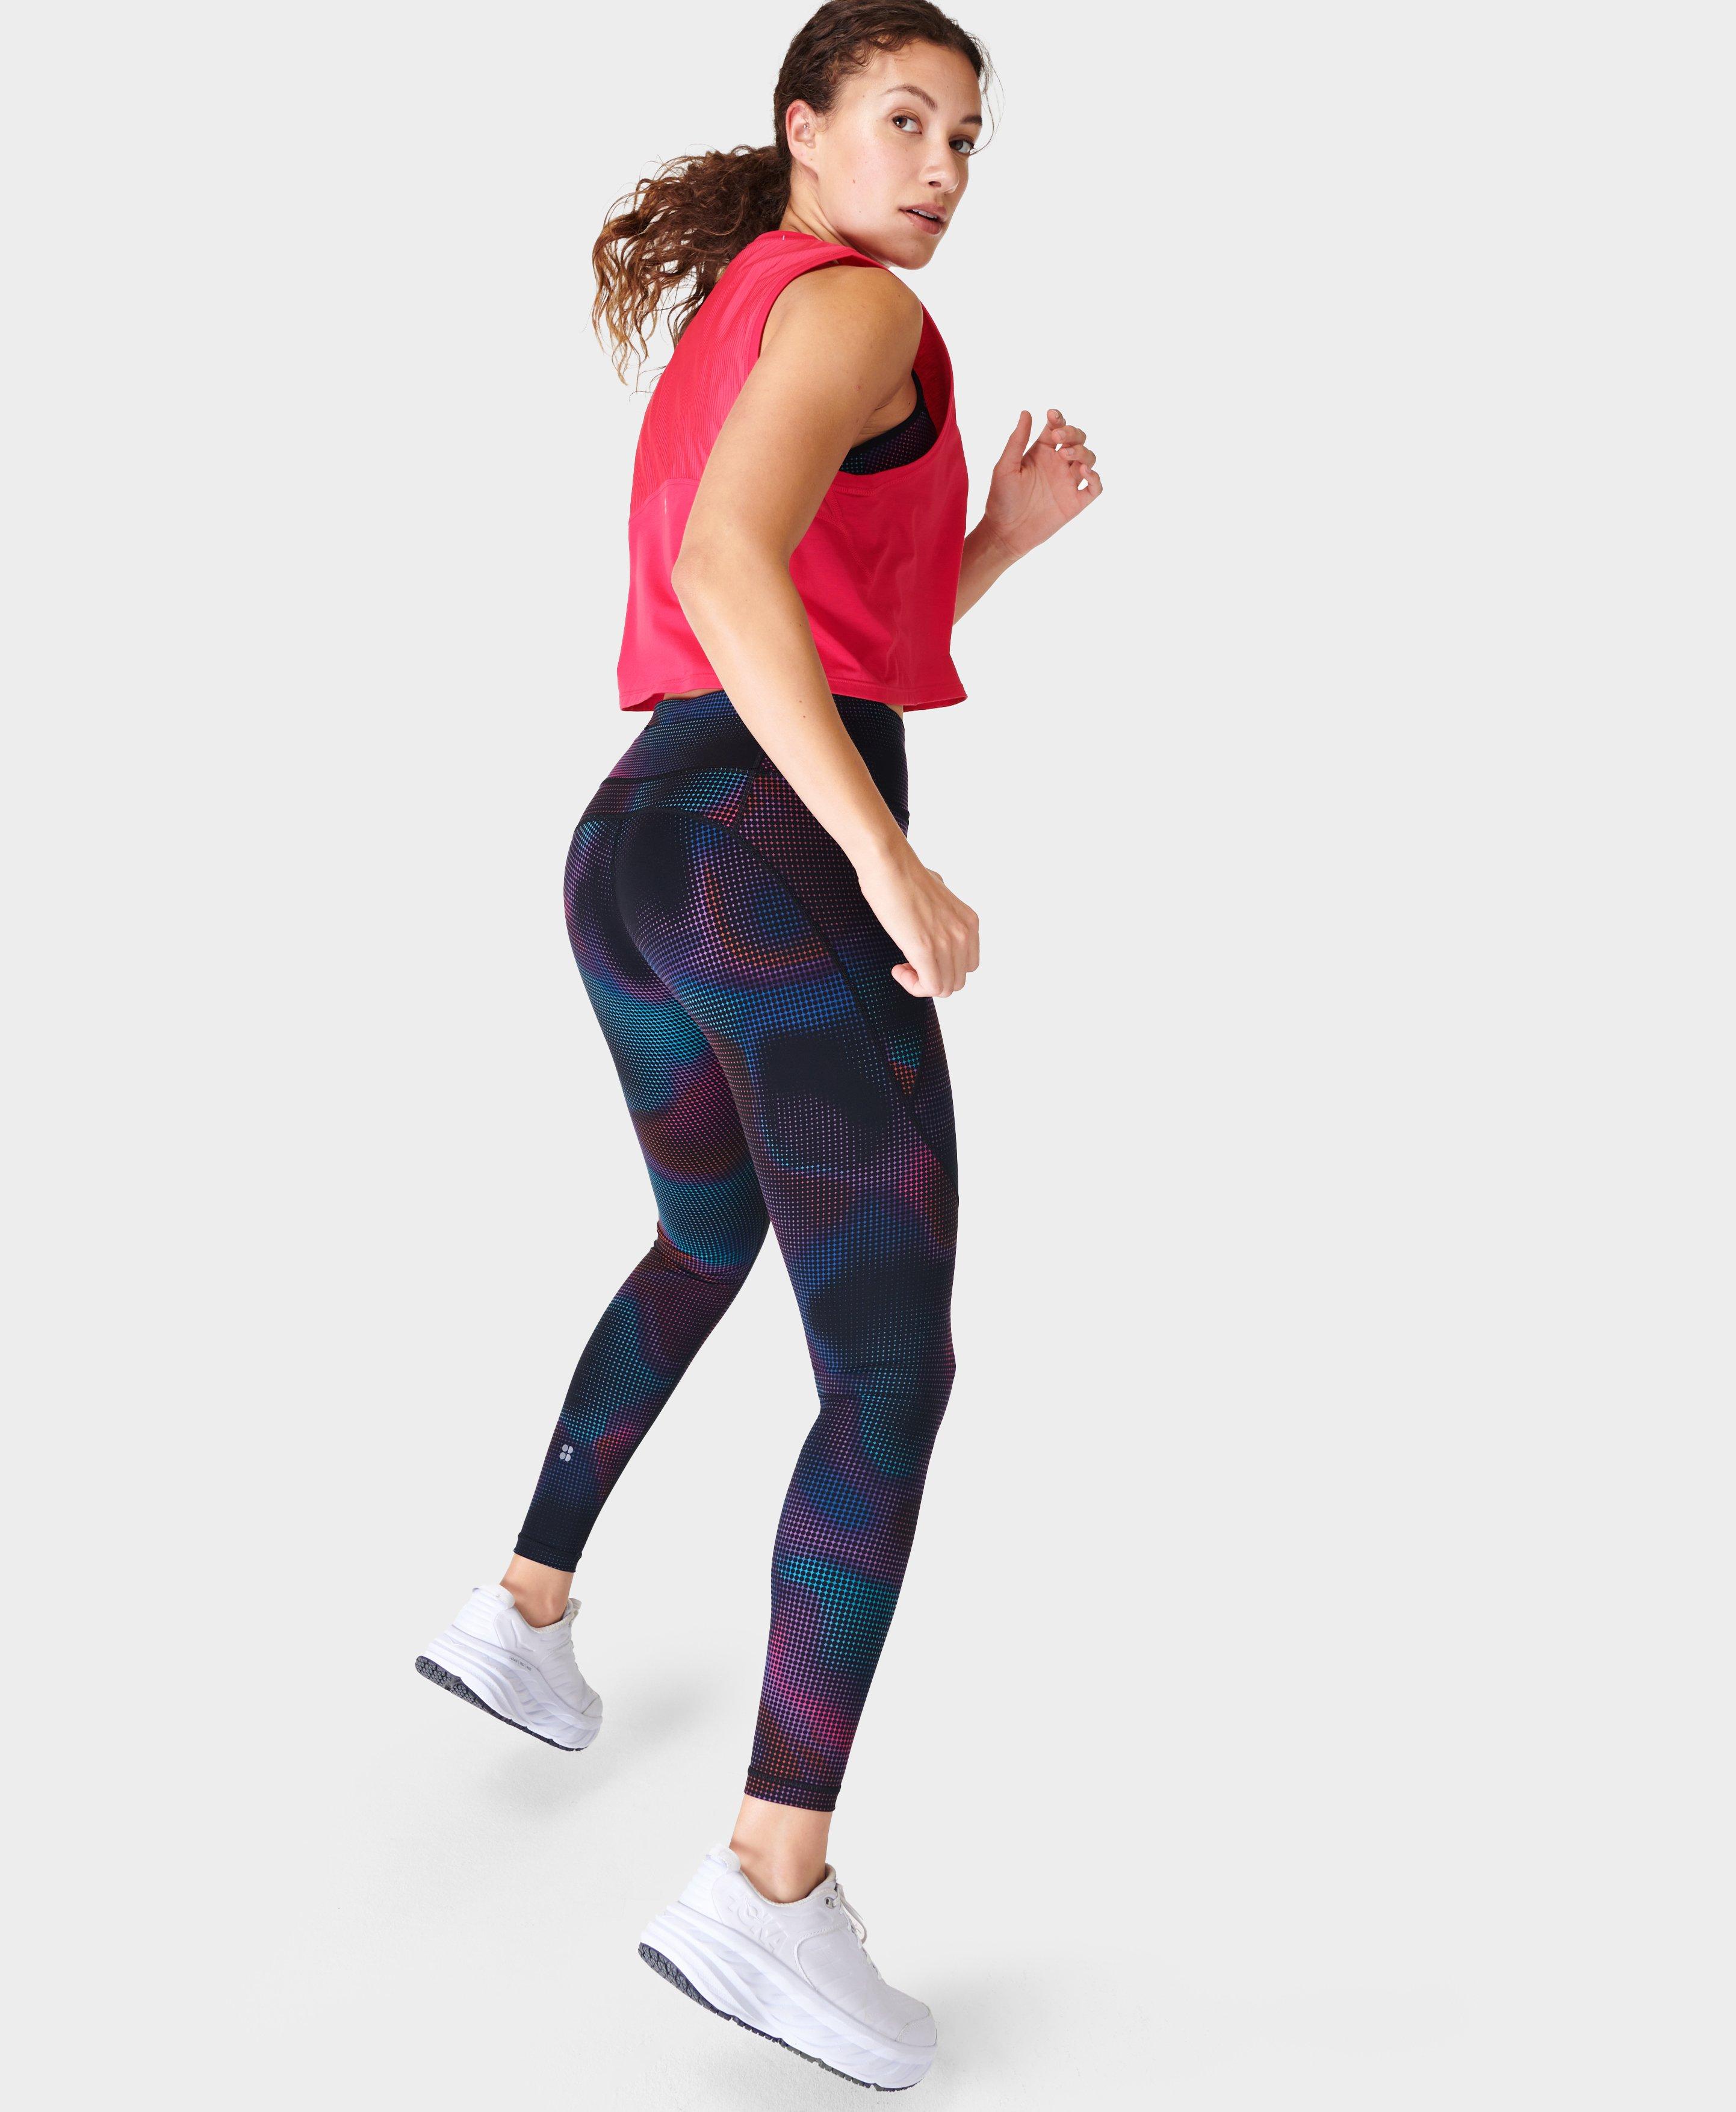 Power Workout Leggings - Black Gradient Dot Print, Women's Leggings